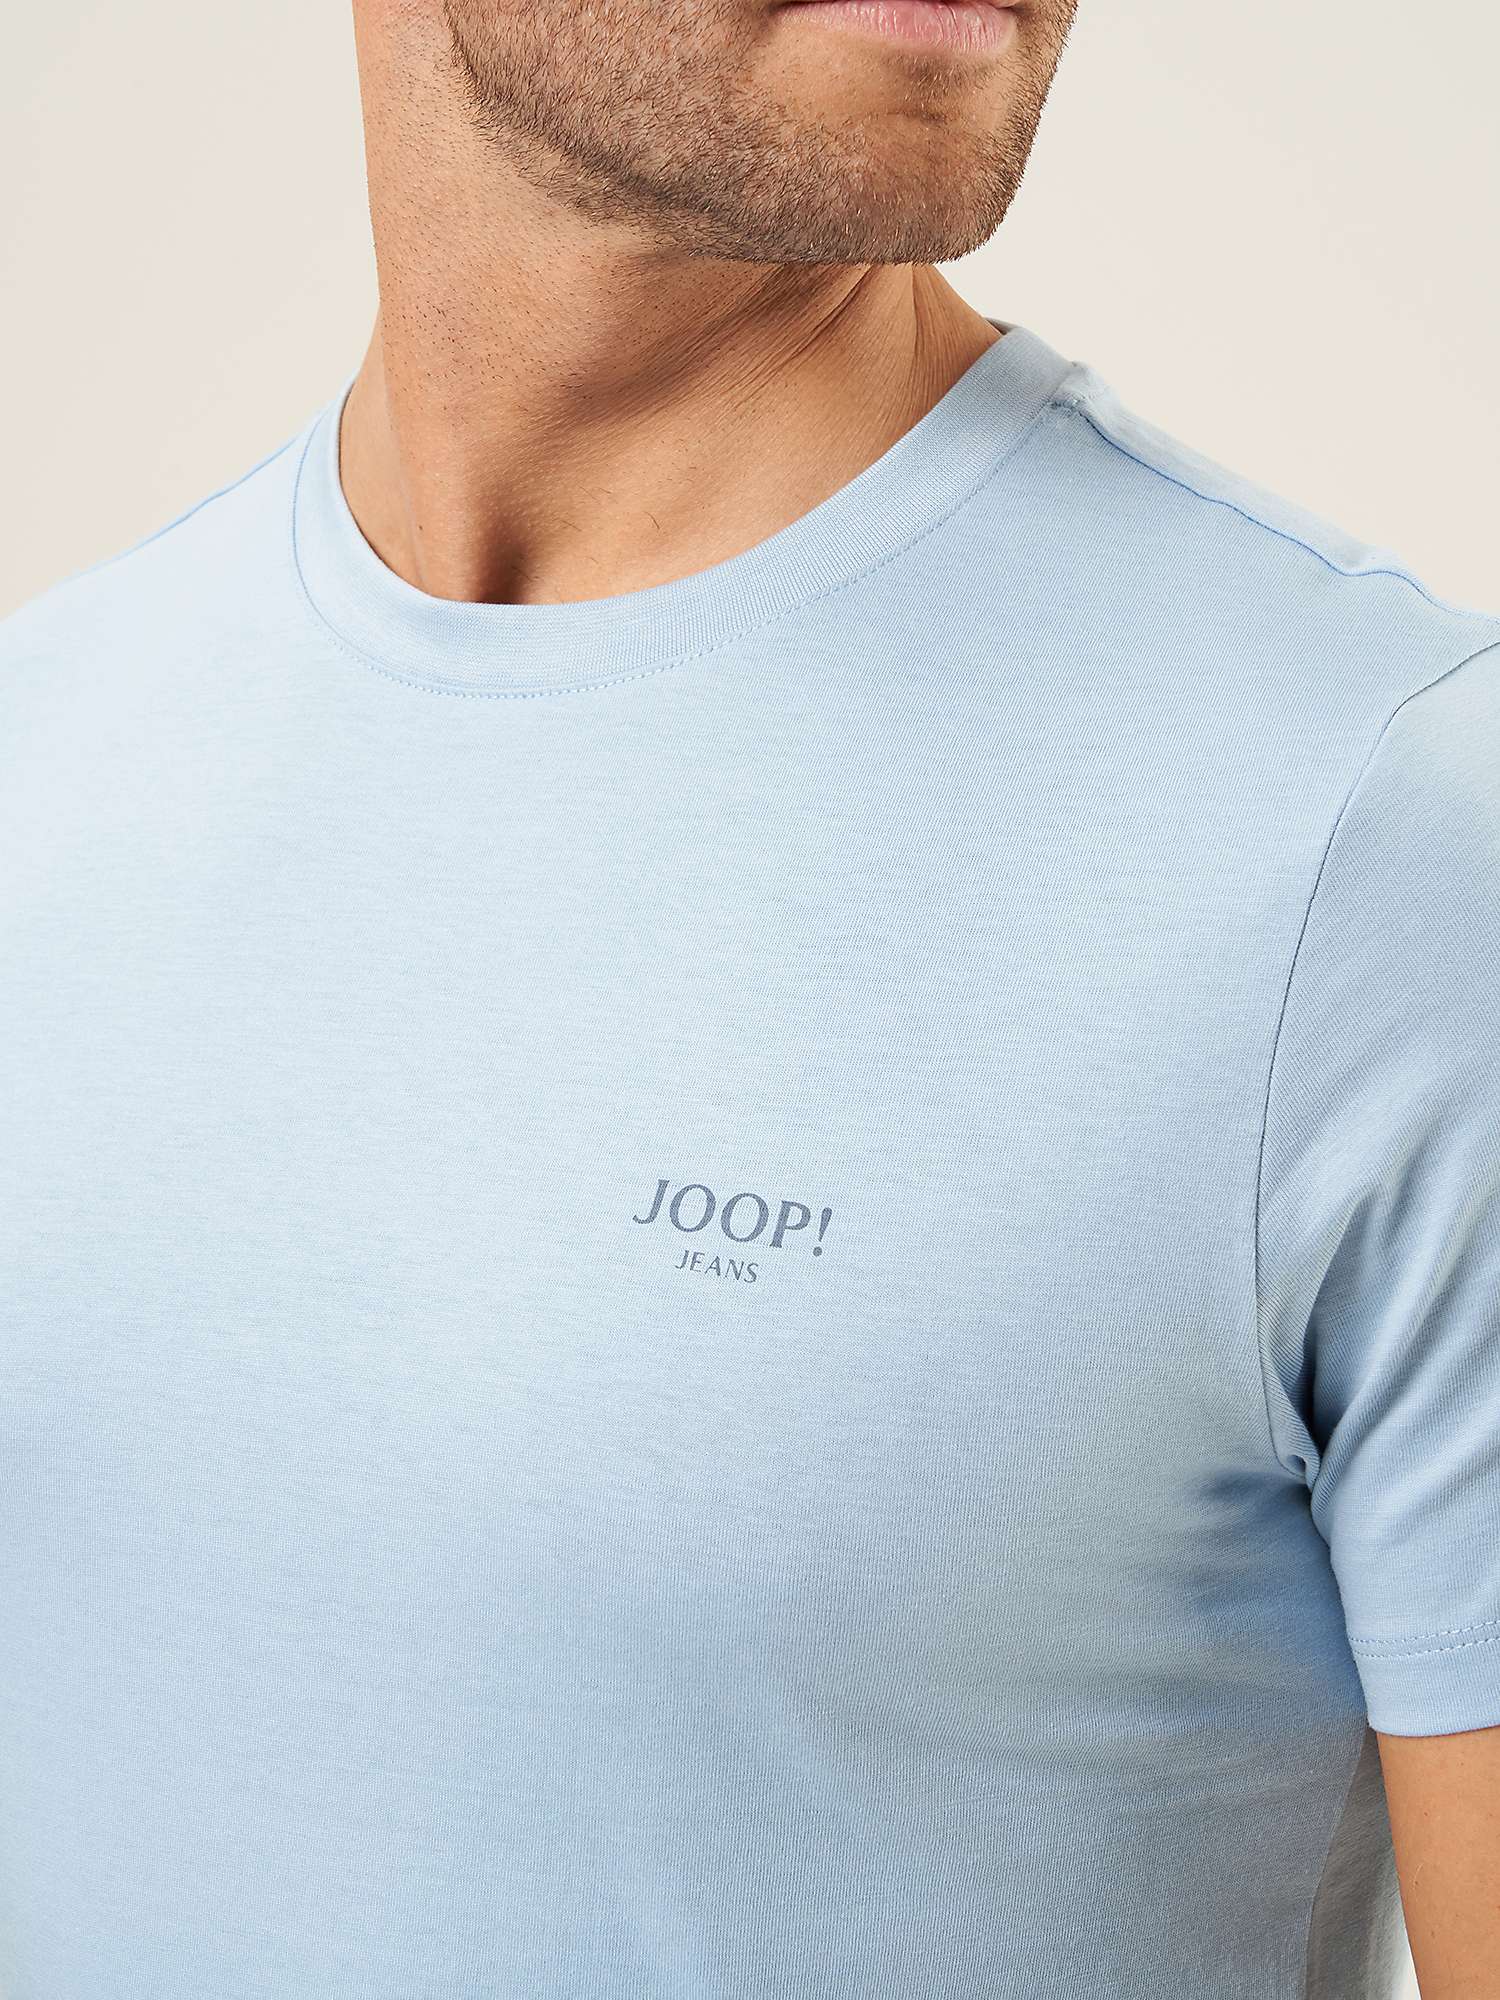 JOOP! Alphis Crew Neck T-Shirt, Open Blue at John Lewis & Partners